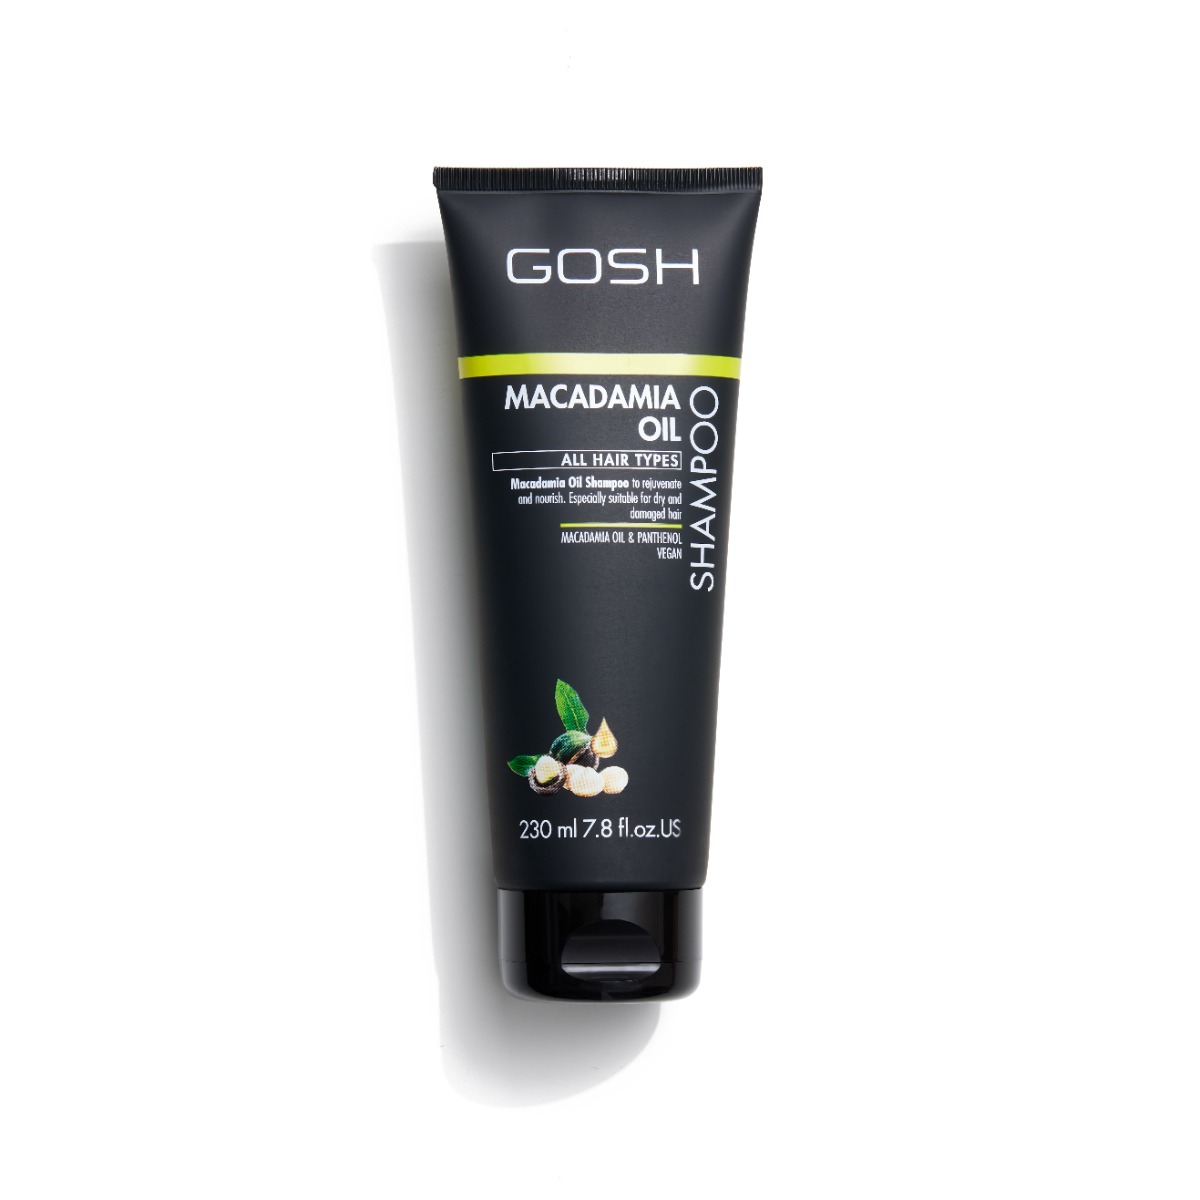 Billede af Hair Shampoo 230ml - Macadamia Oil hos Gosh Copenhagen